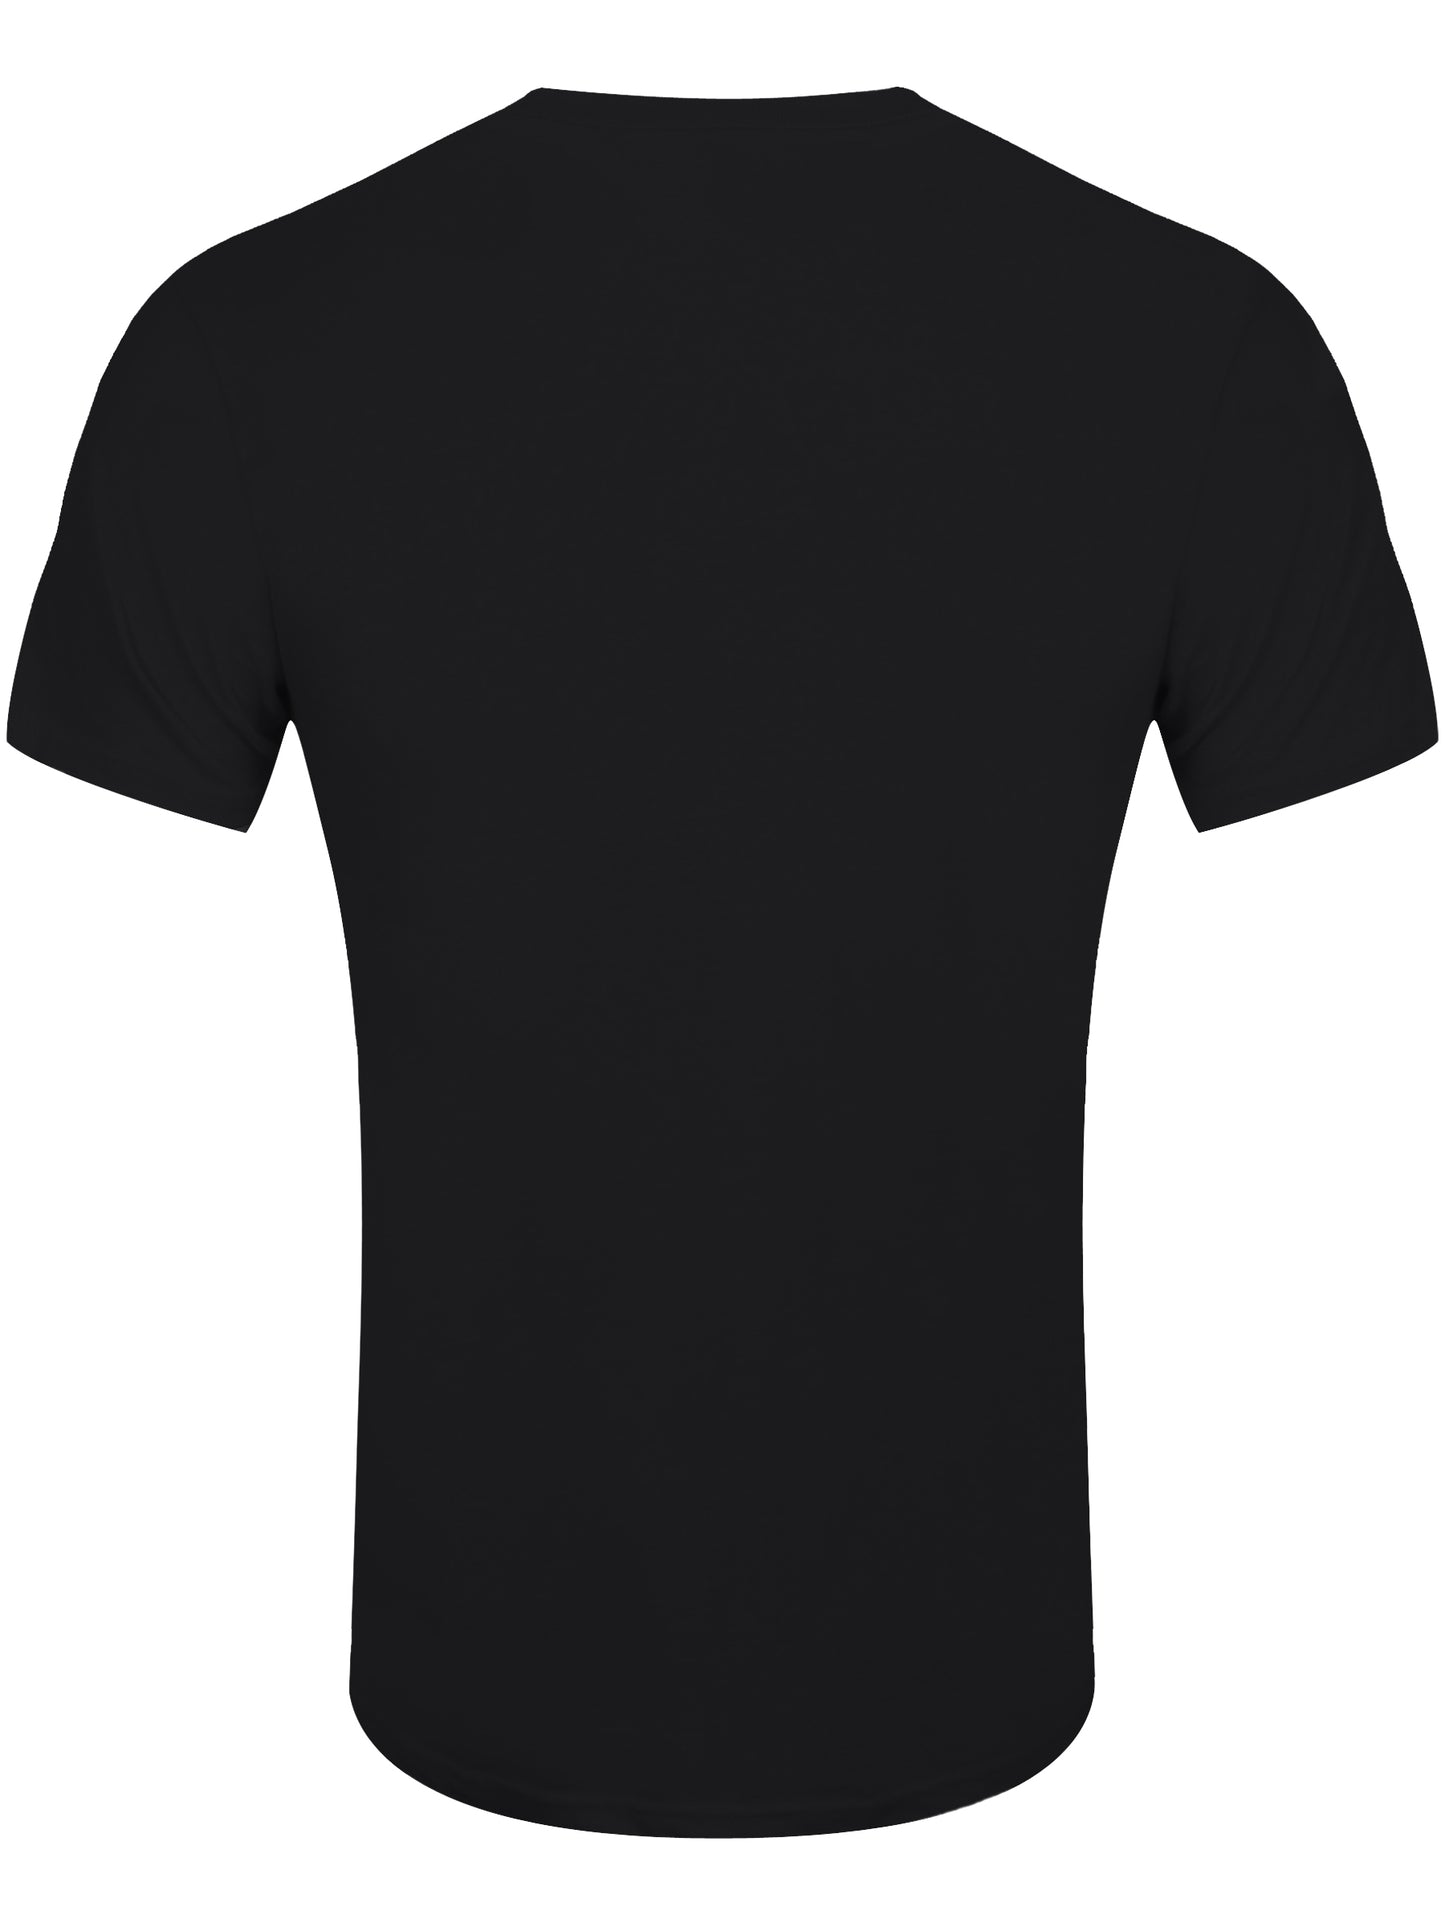 Star Wars Mandalorian Retro Poster Men's Black T-Shirt